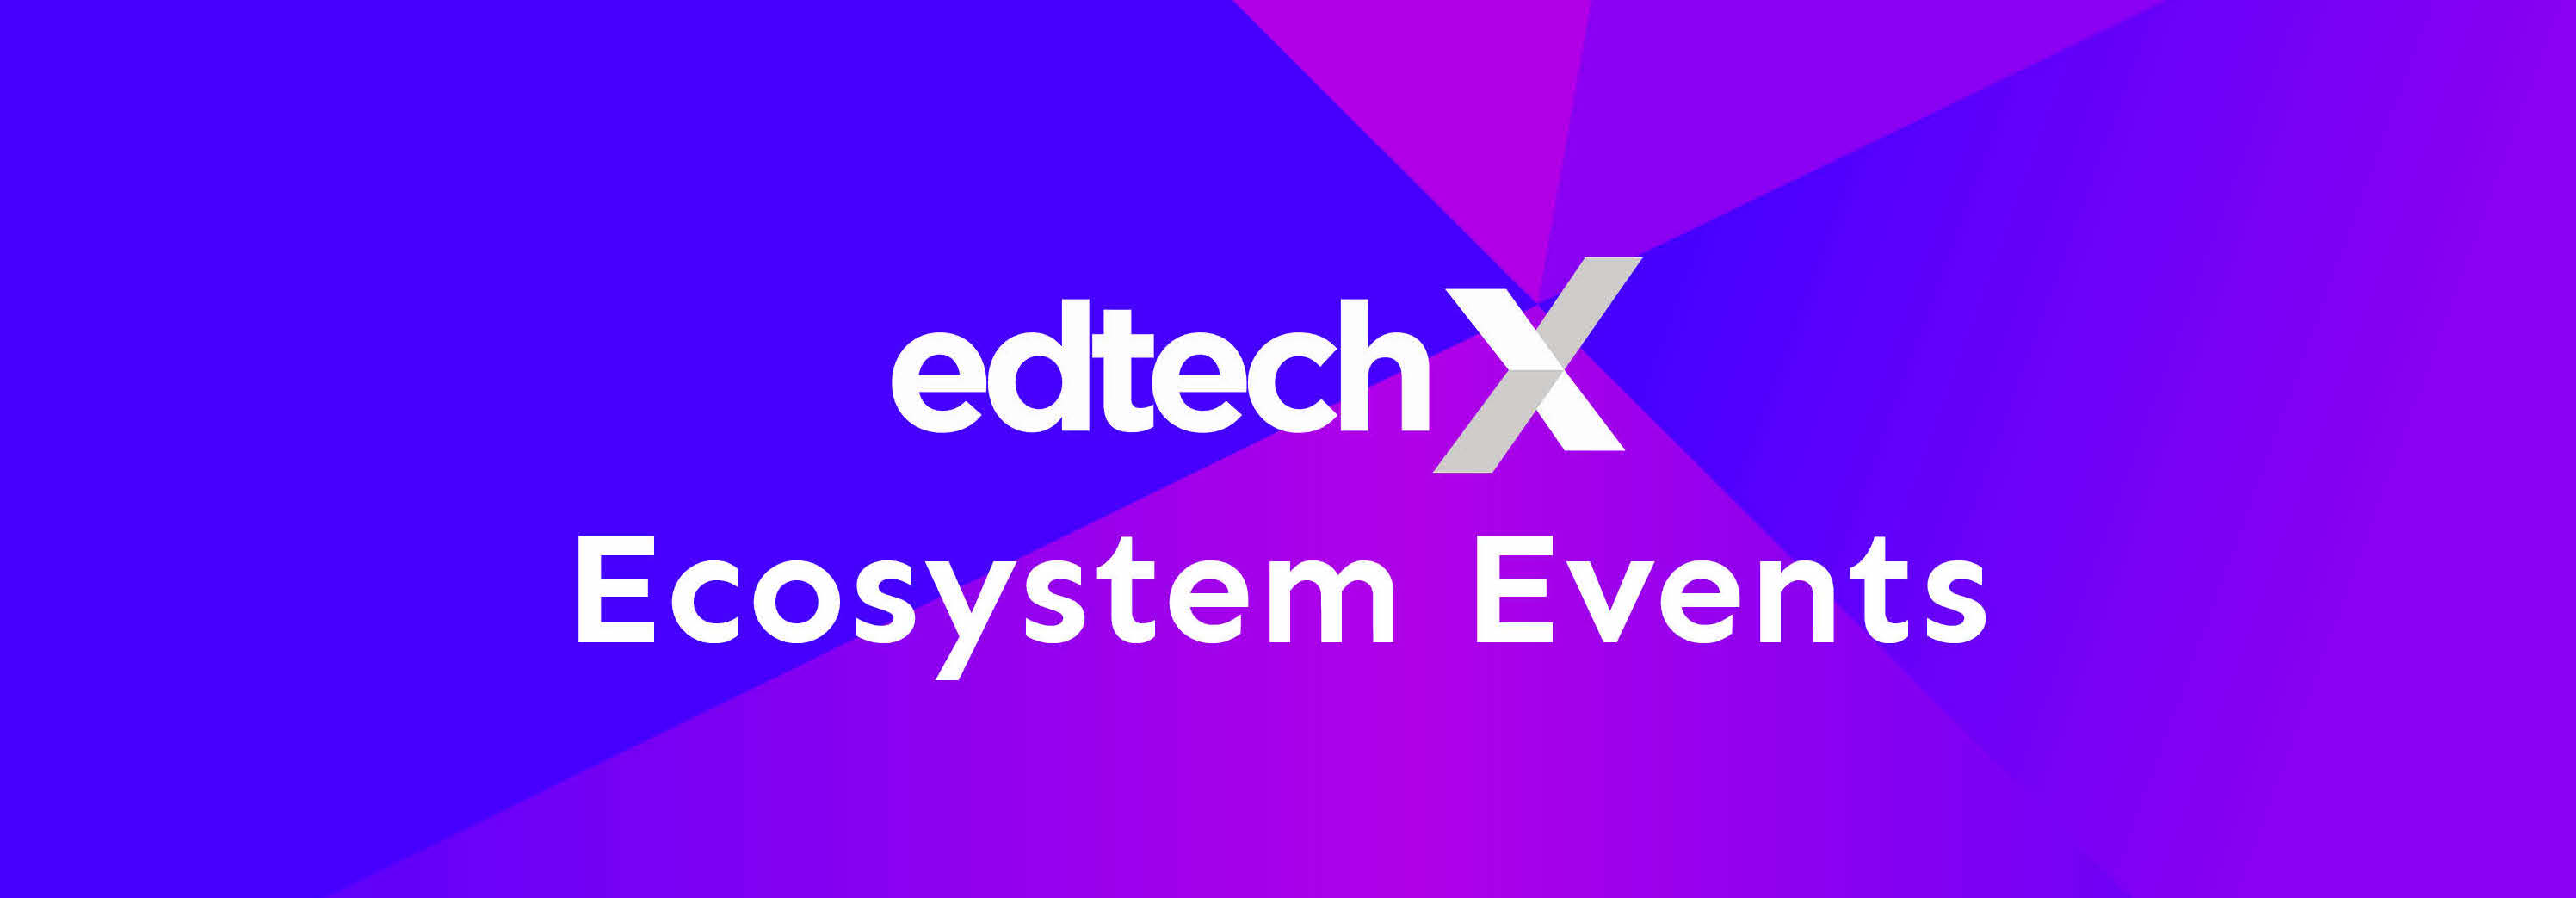 EdTechX Ecosystem Events 2019